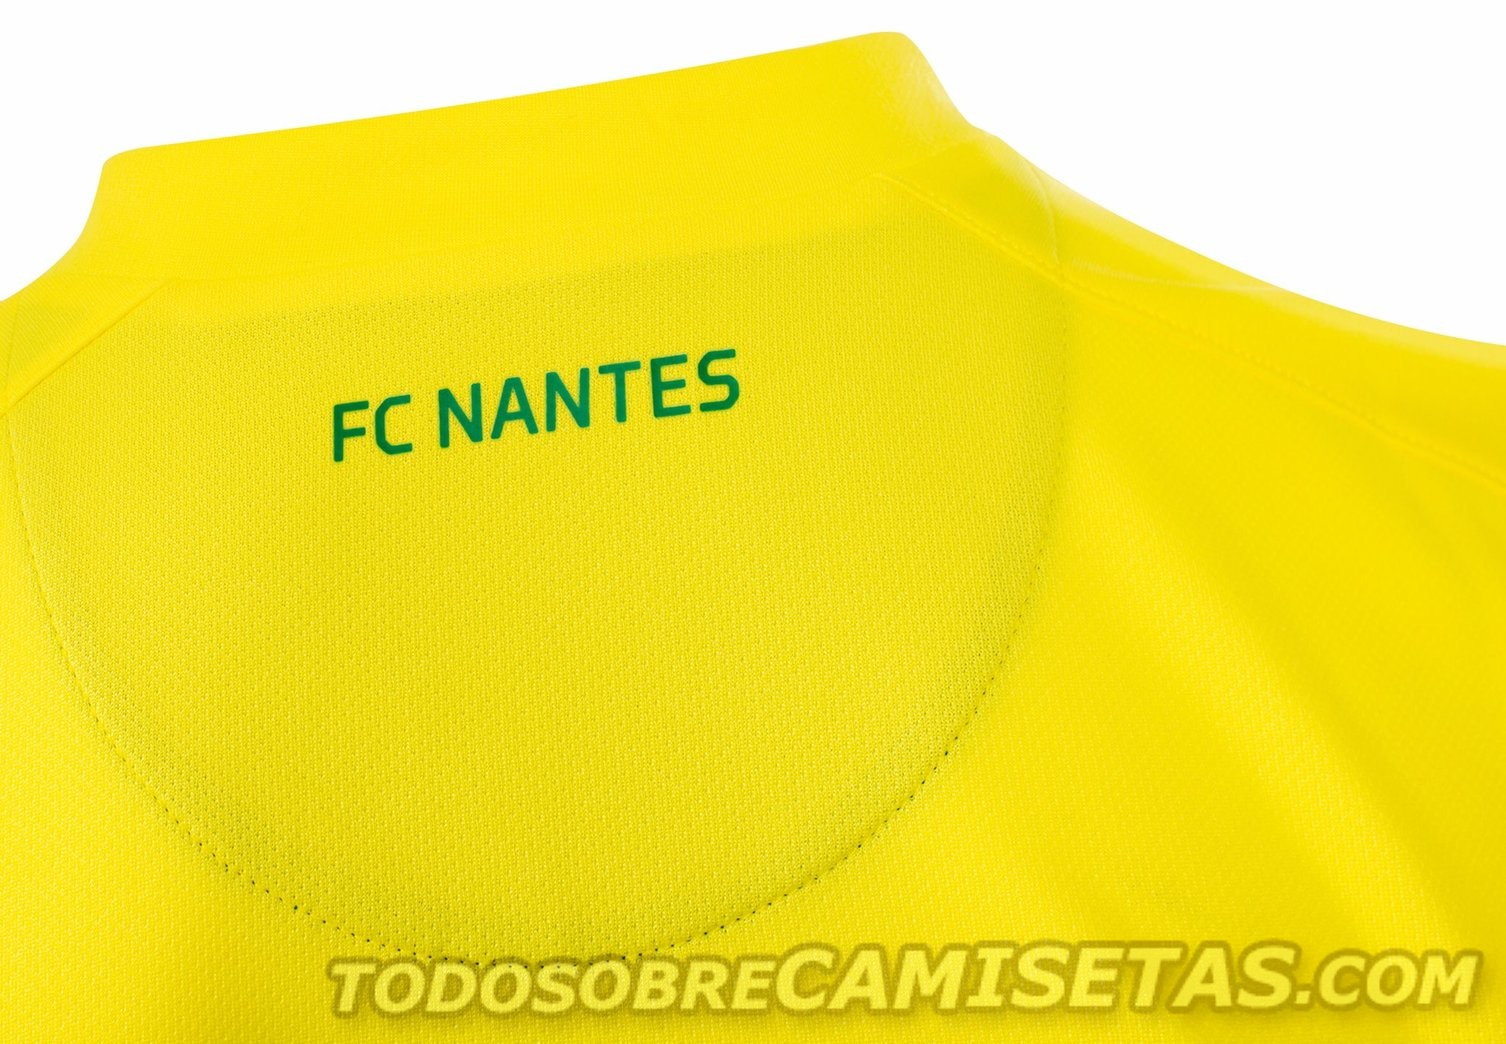 FC Nantes Umbro 2016-17 Home Kit